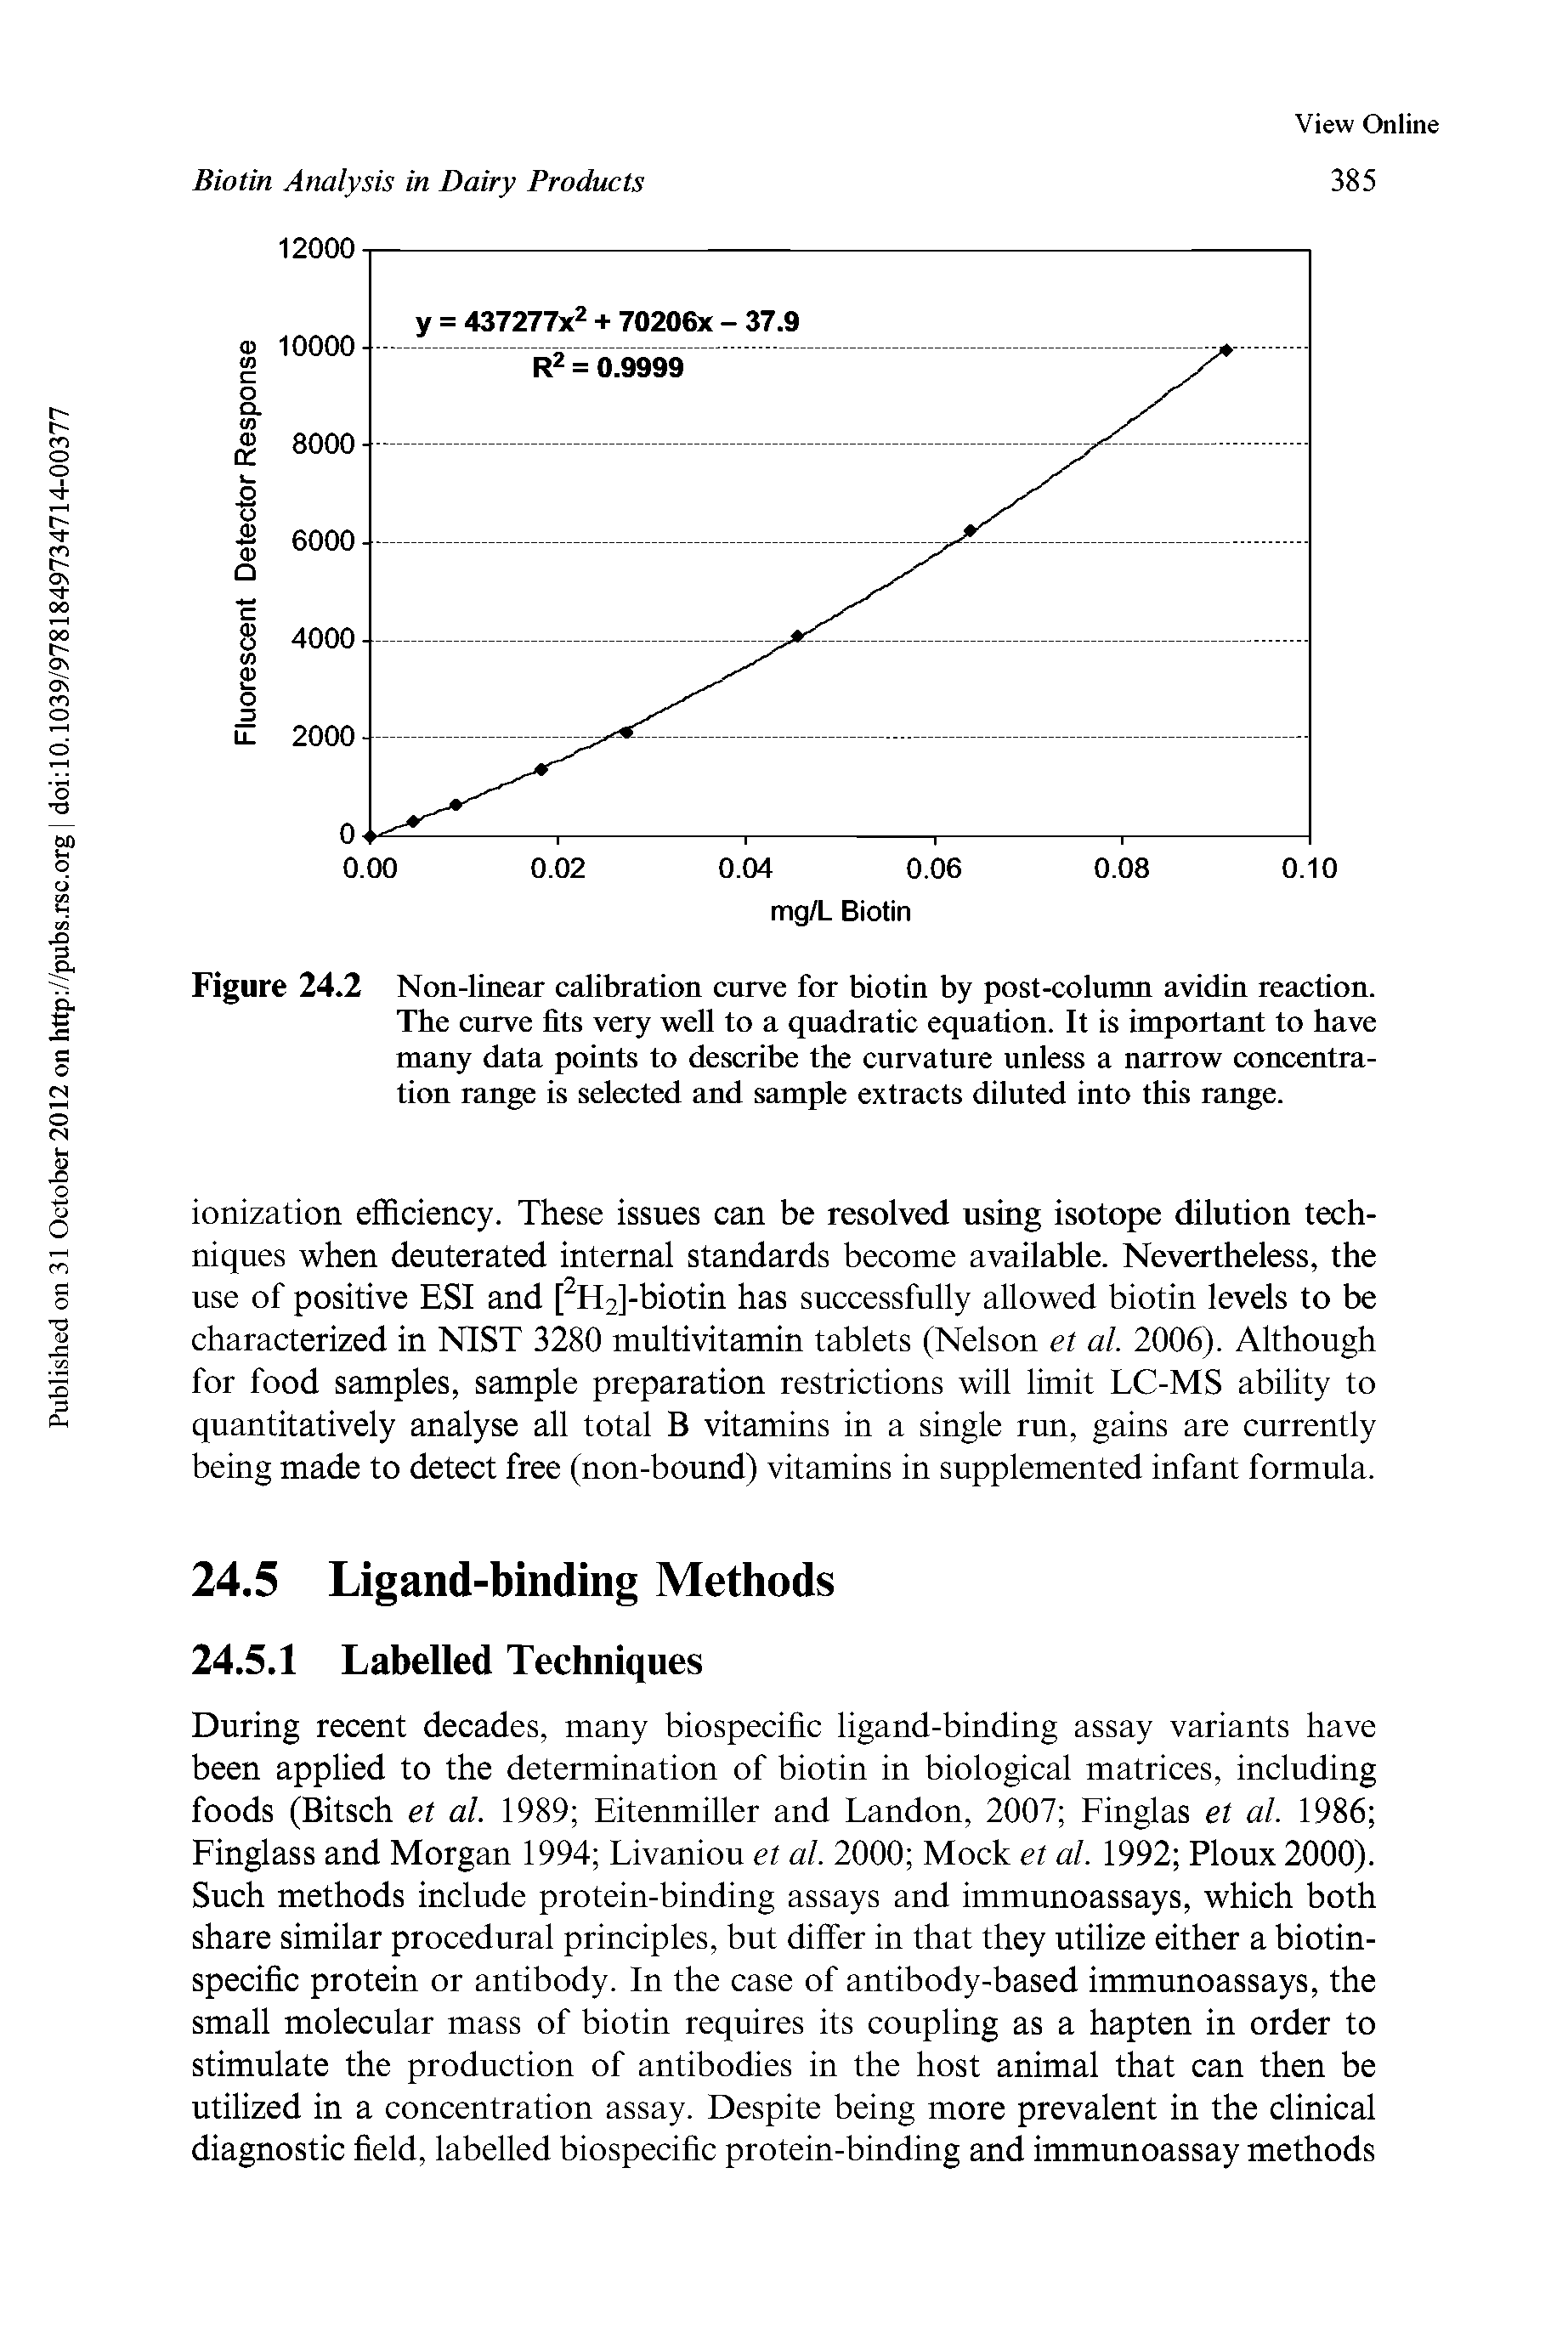 Figure 24.2 Non-linear calibration curve for biotin by post-column avidin reaction.